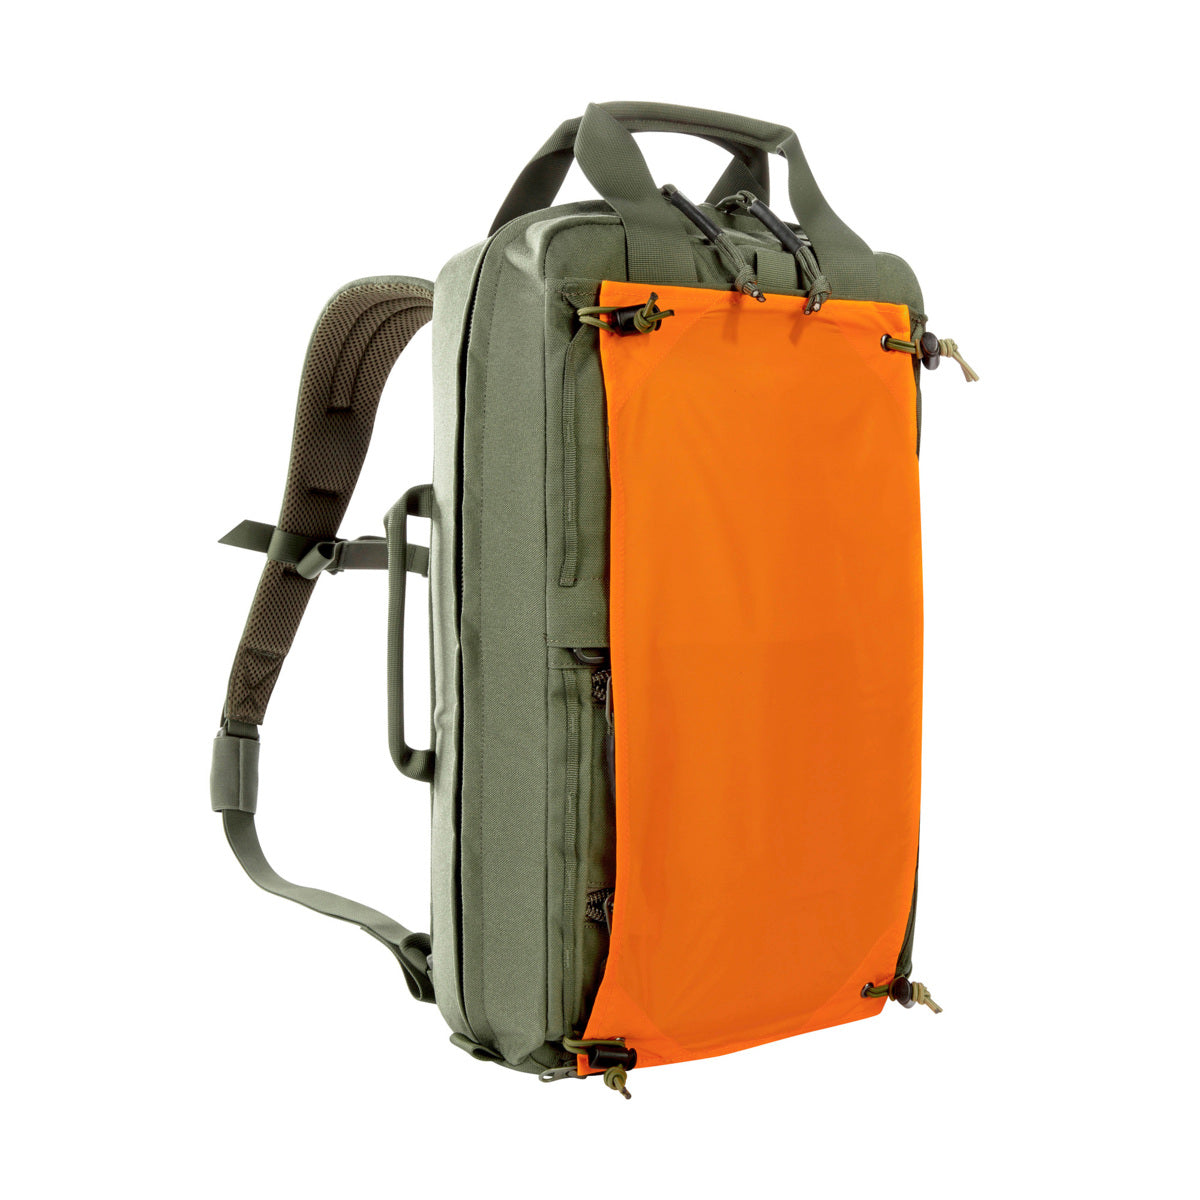 Tasmanian Tiger TT Survival Pack Backpack Bags, Packs and Cases Tasmanian Tiger Tactical Gear Supplier Tactical Distributors Australia